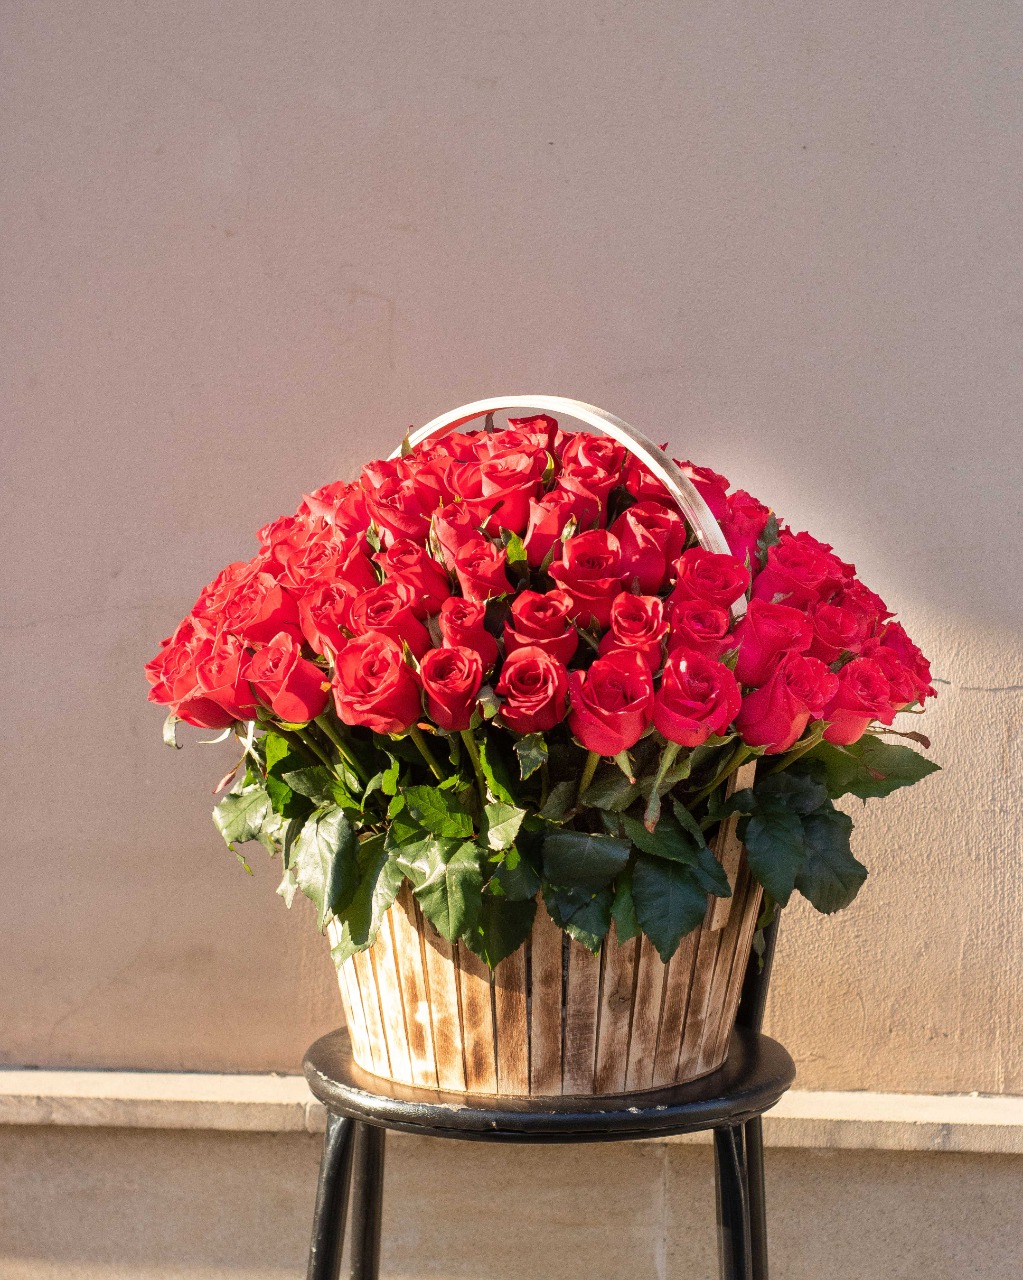 101 Red rose |  Red rose bouquet | 101 roses basket